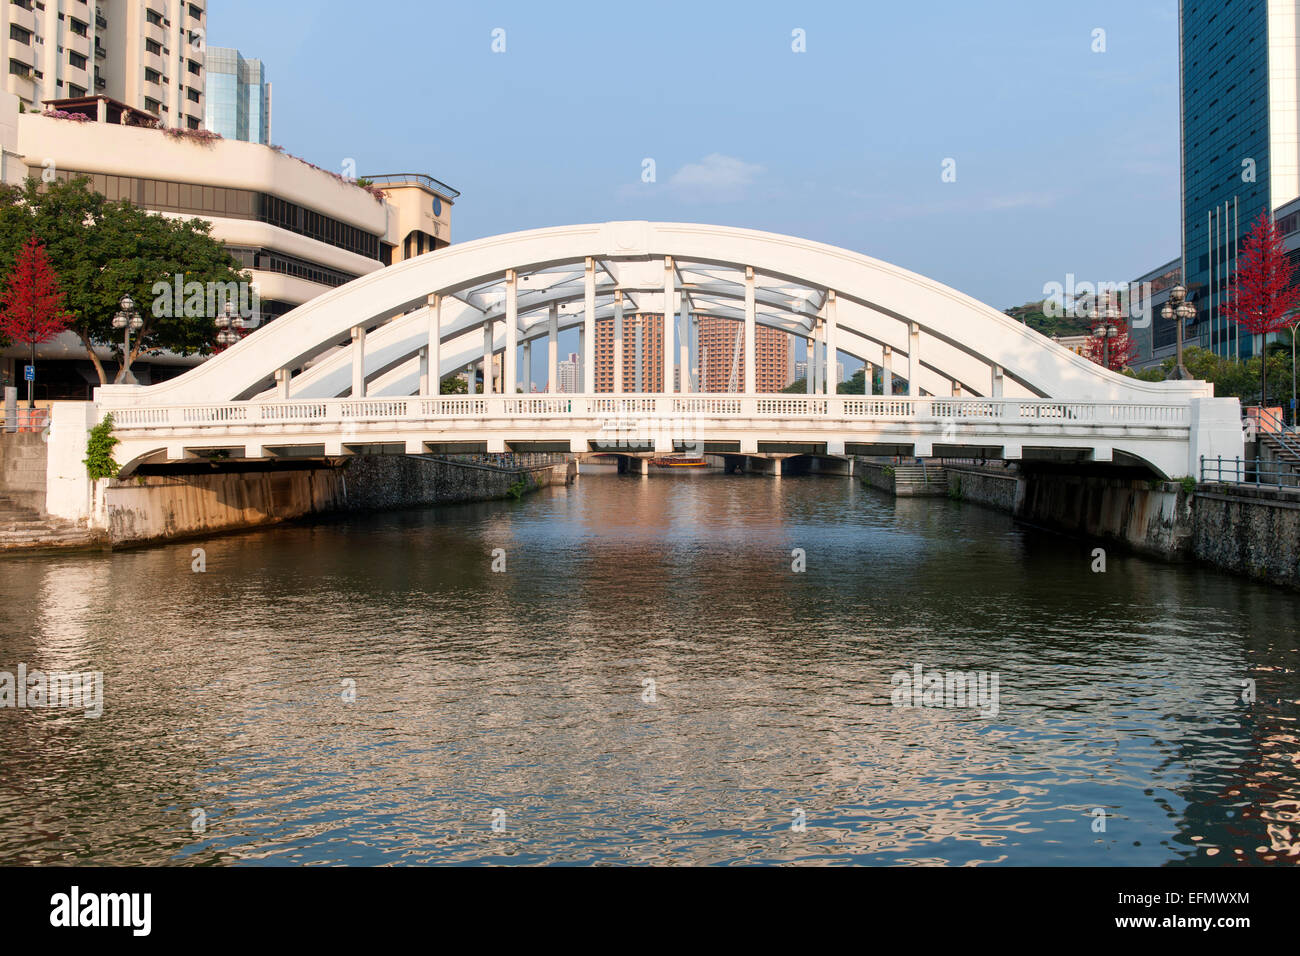 The Elgin bridge and Singapore river in Singapore. Stock Photo